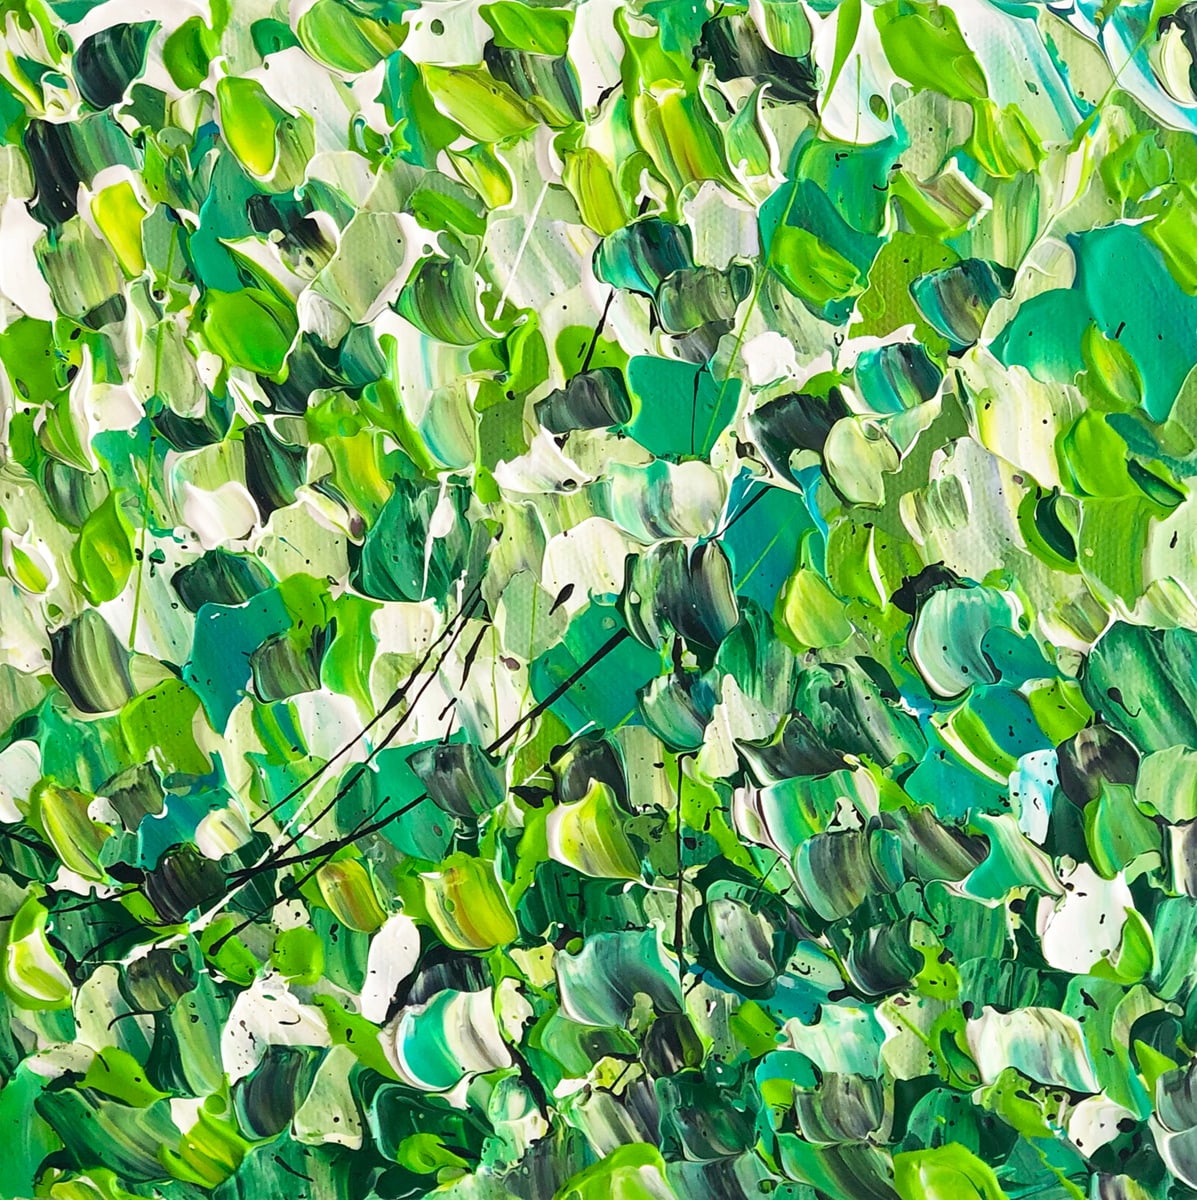 Fields of Green by Bridget Bradley  Image: Fields of Green - Abstract Expressionism Painting - ©Bridget Bradley